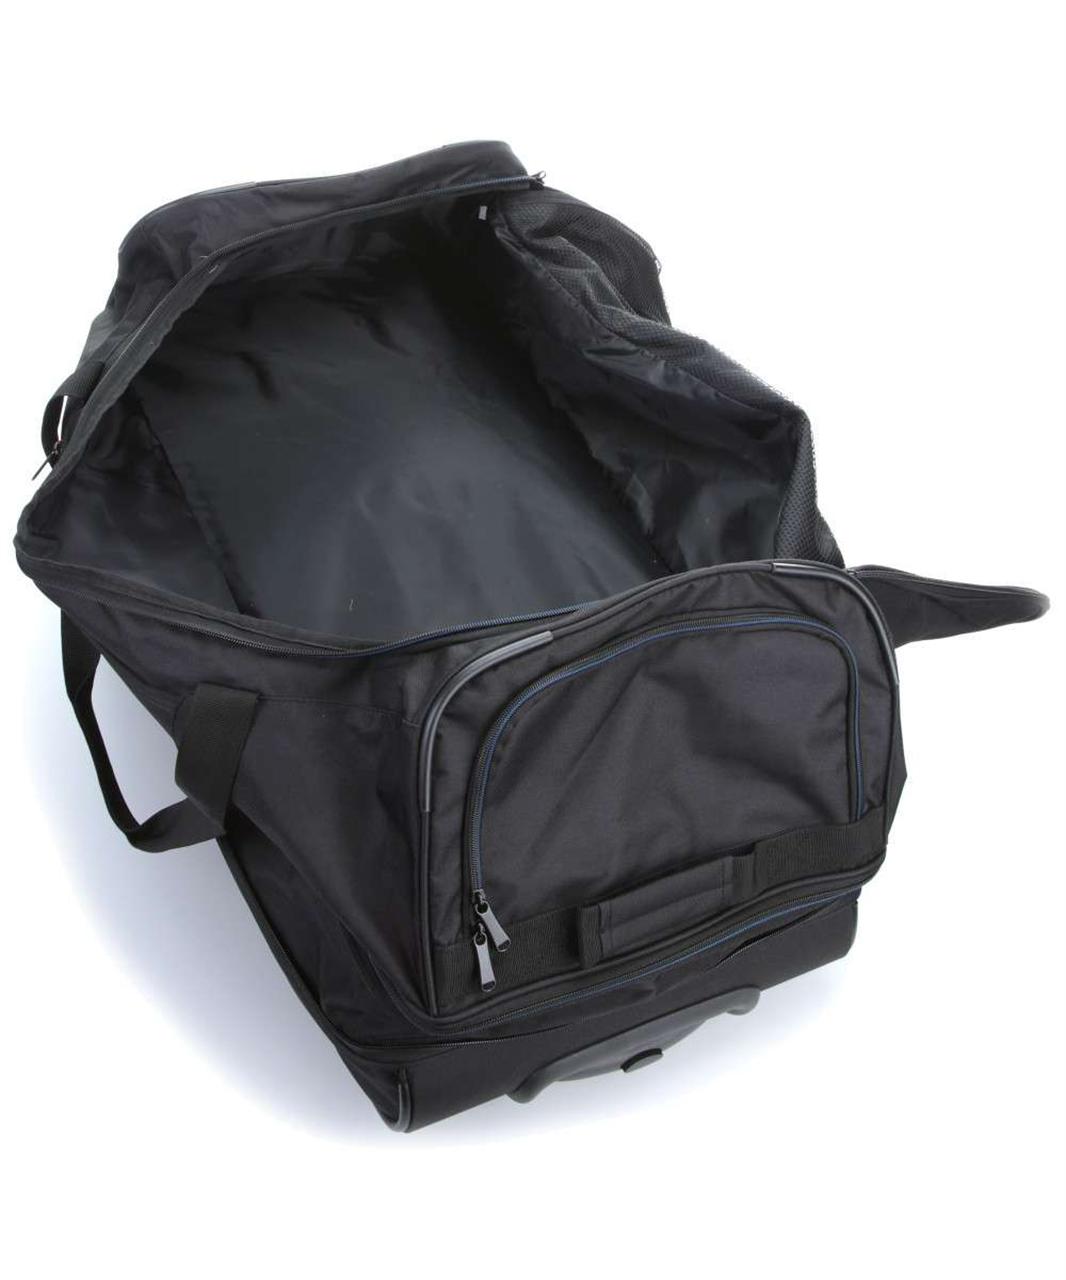 BASICS Trolley-Reisetasche, erweiterbar, 70cm, schwarz | Reisetaschen |  Koffer/Reisebegleiter | Taschen/Koffer | May fashion